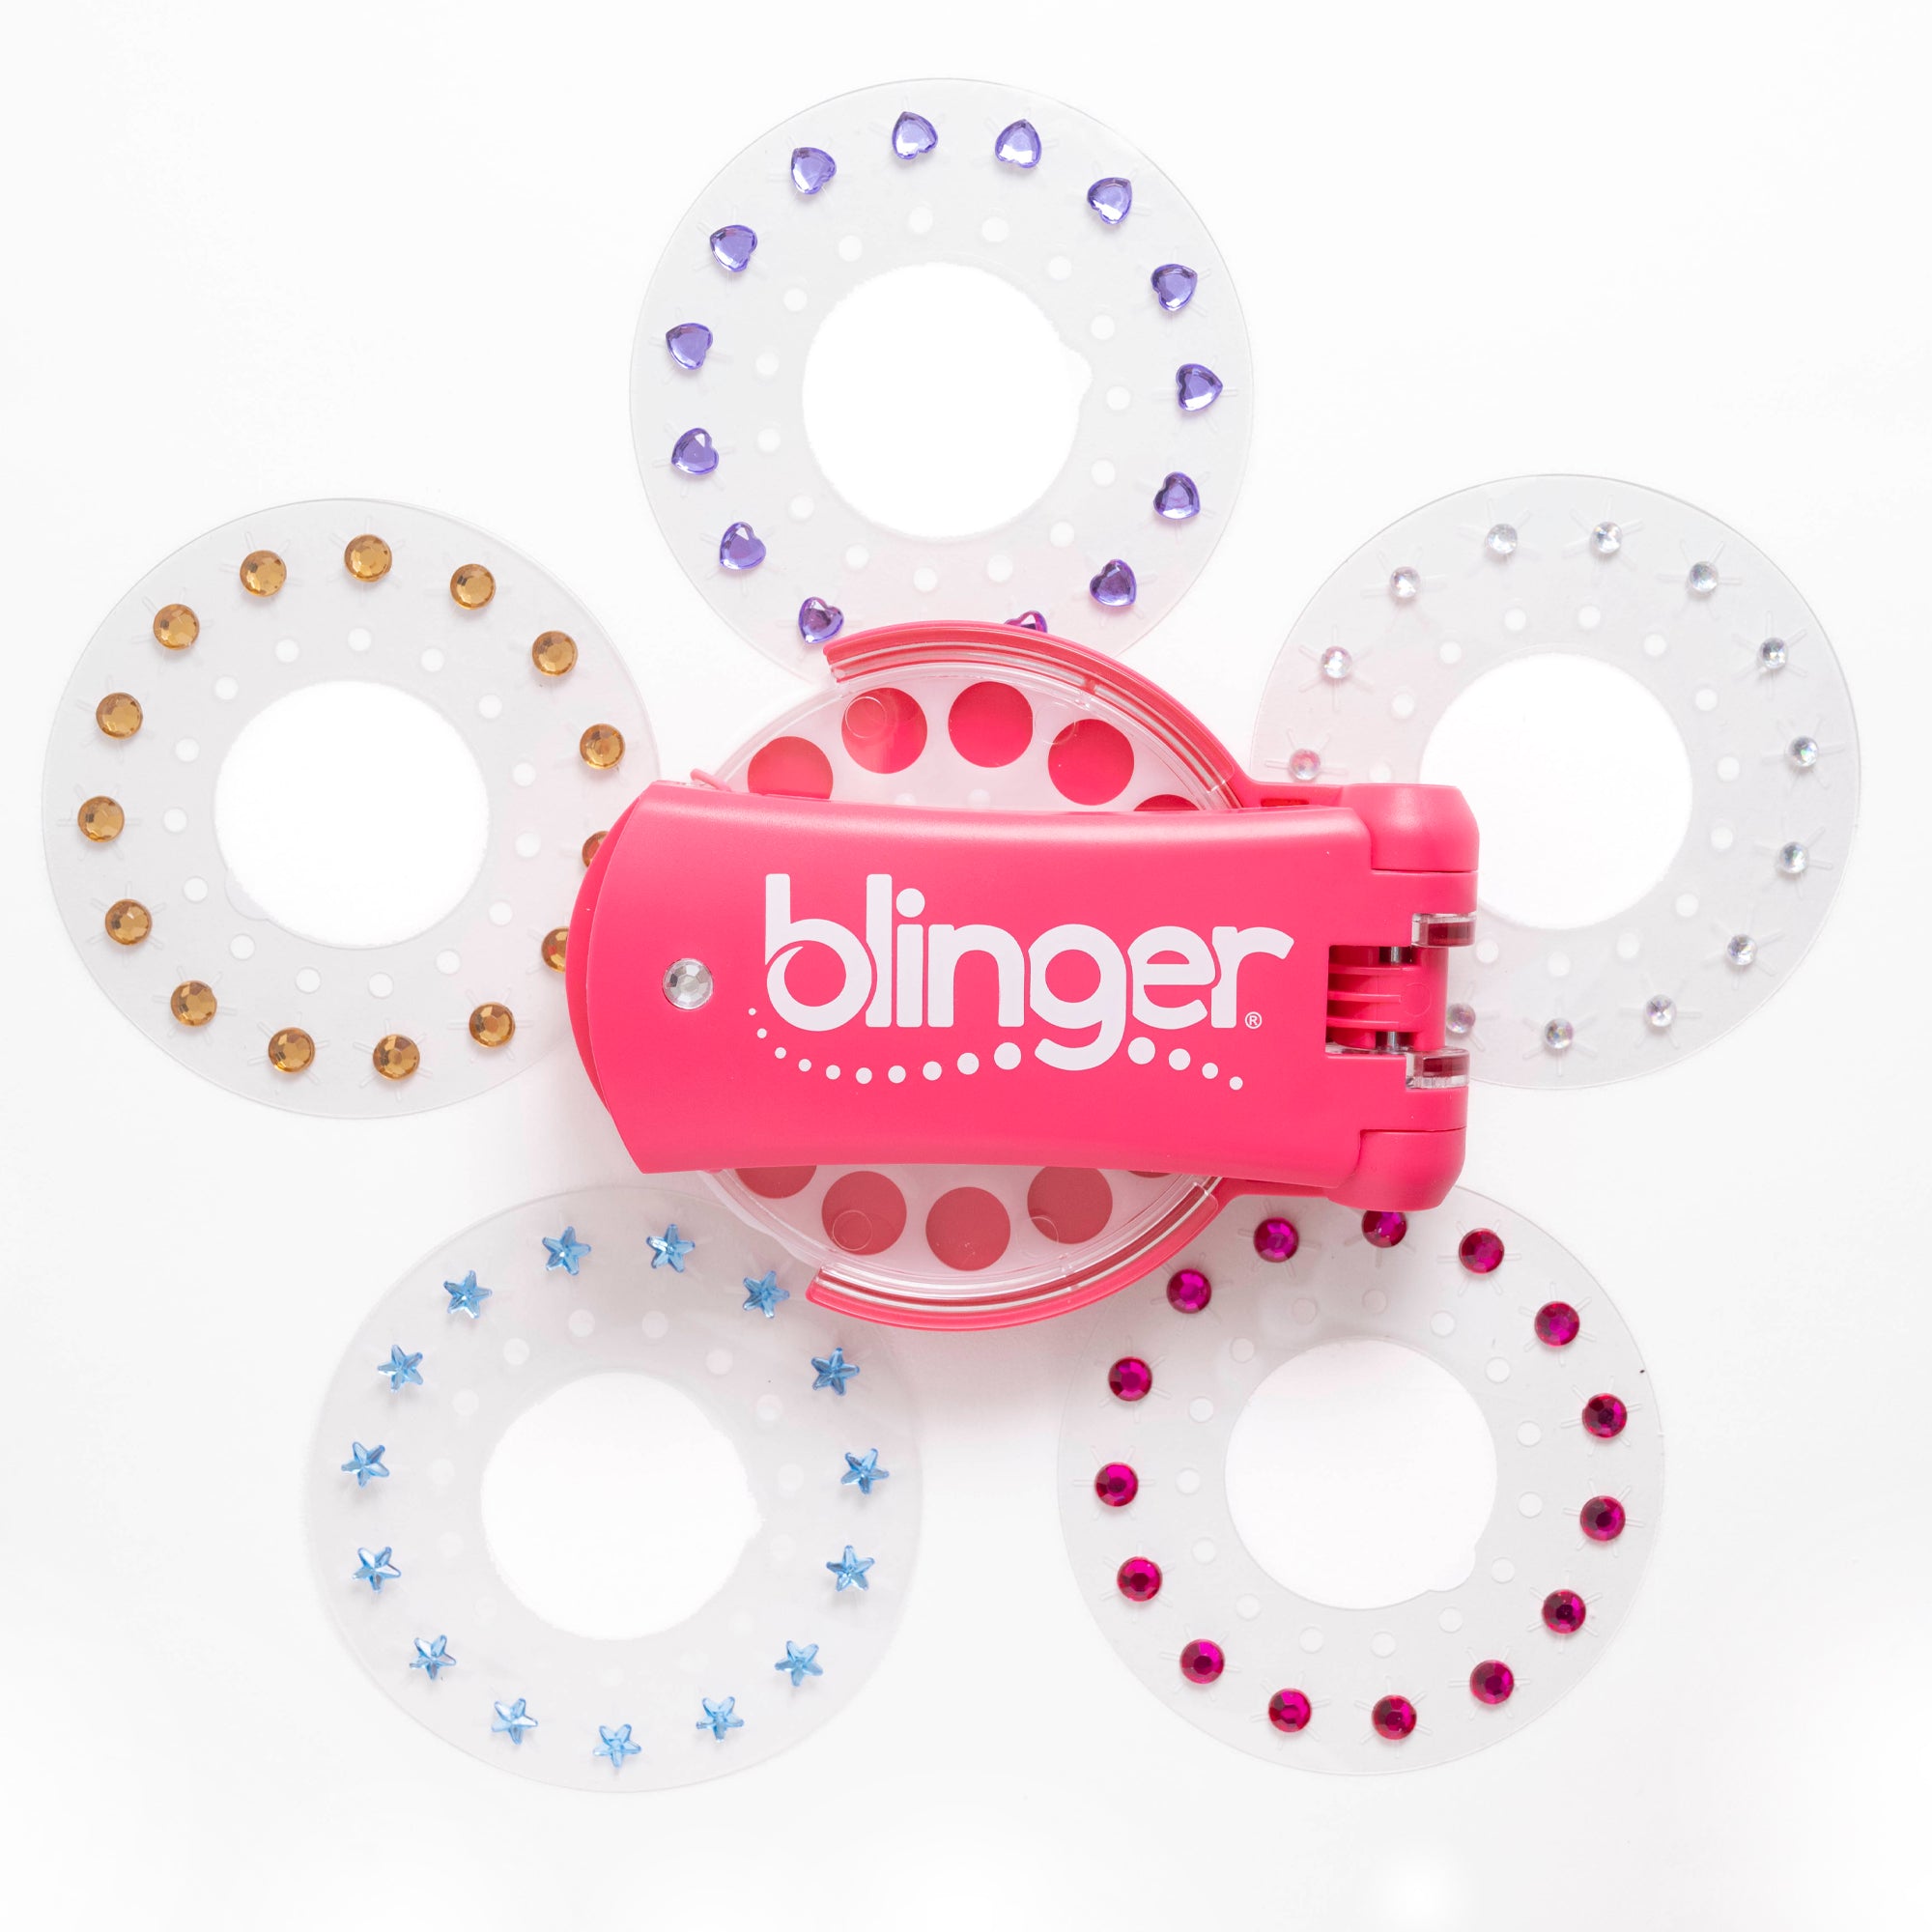 blinger® Dazzling Collection Starter Kit with blinger® Gem Stamper + 75 Colorful Acrylic Rhinestones